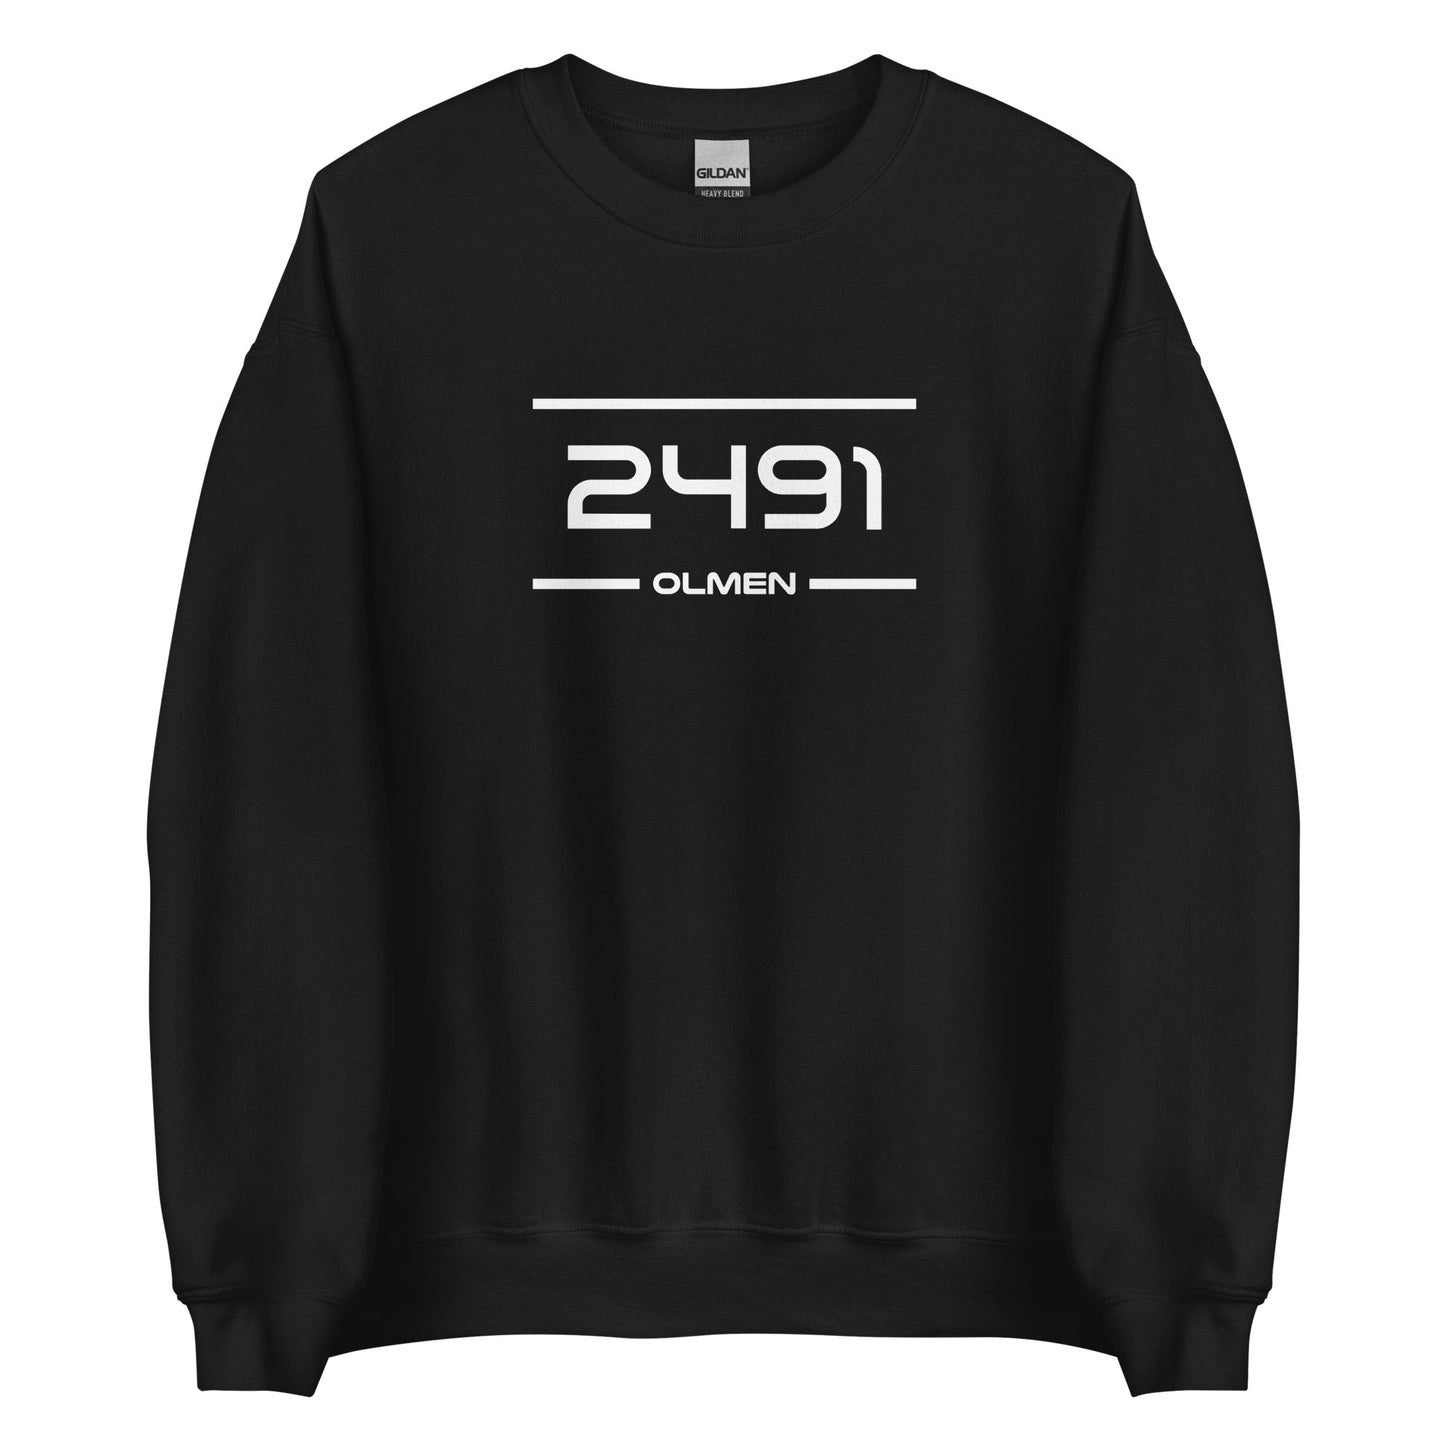 Sweater - 2491 - Olmen (M/V)